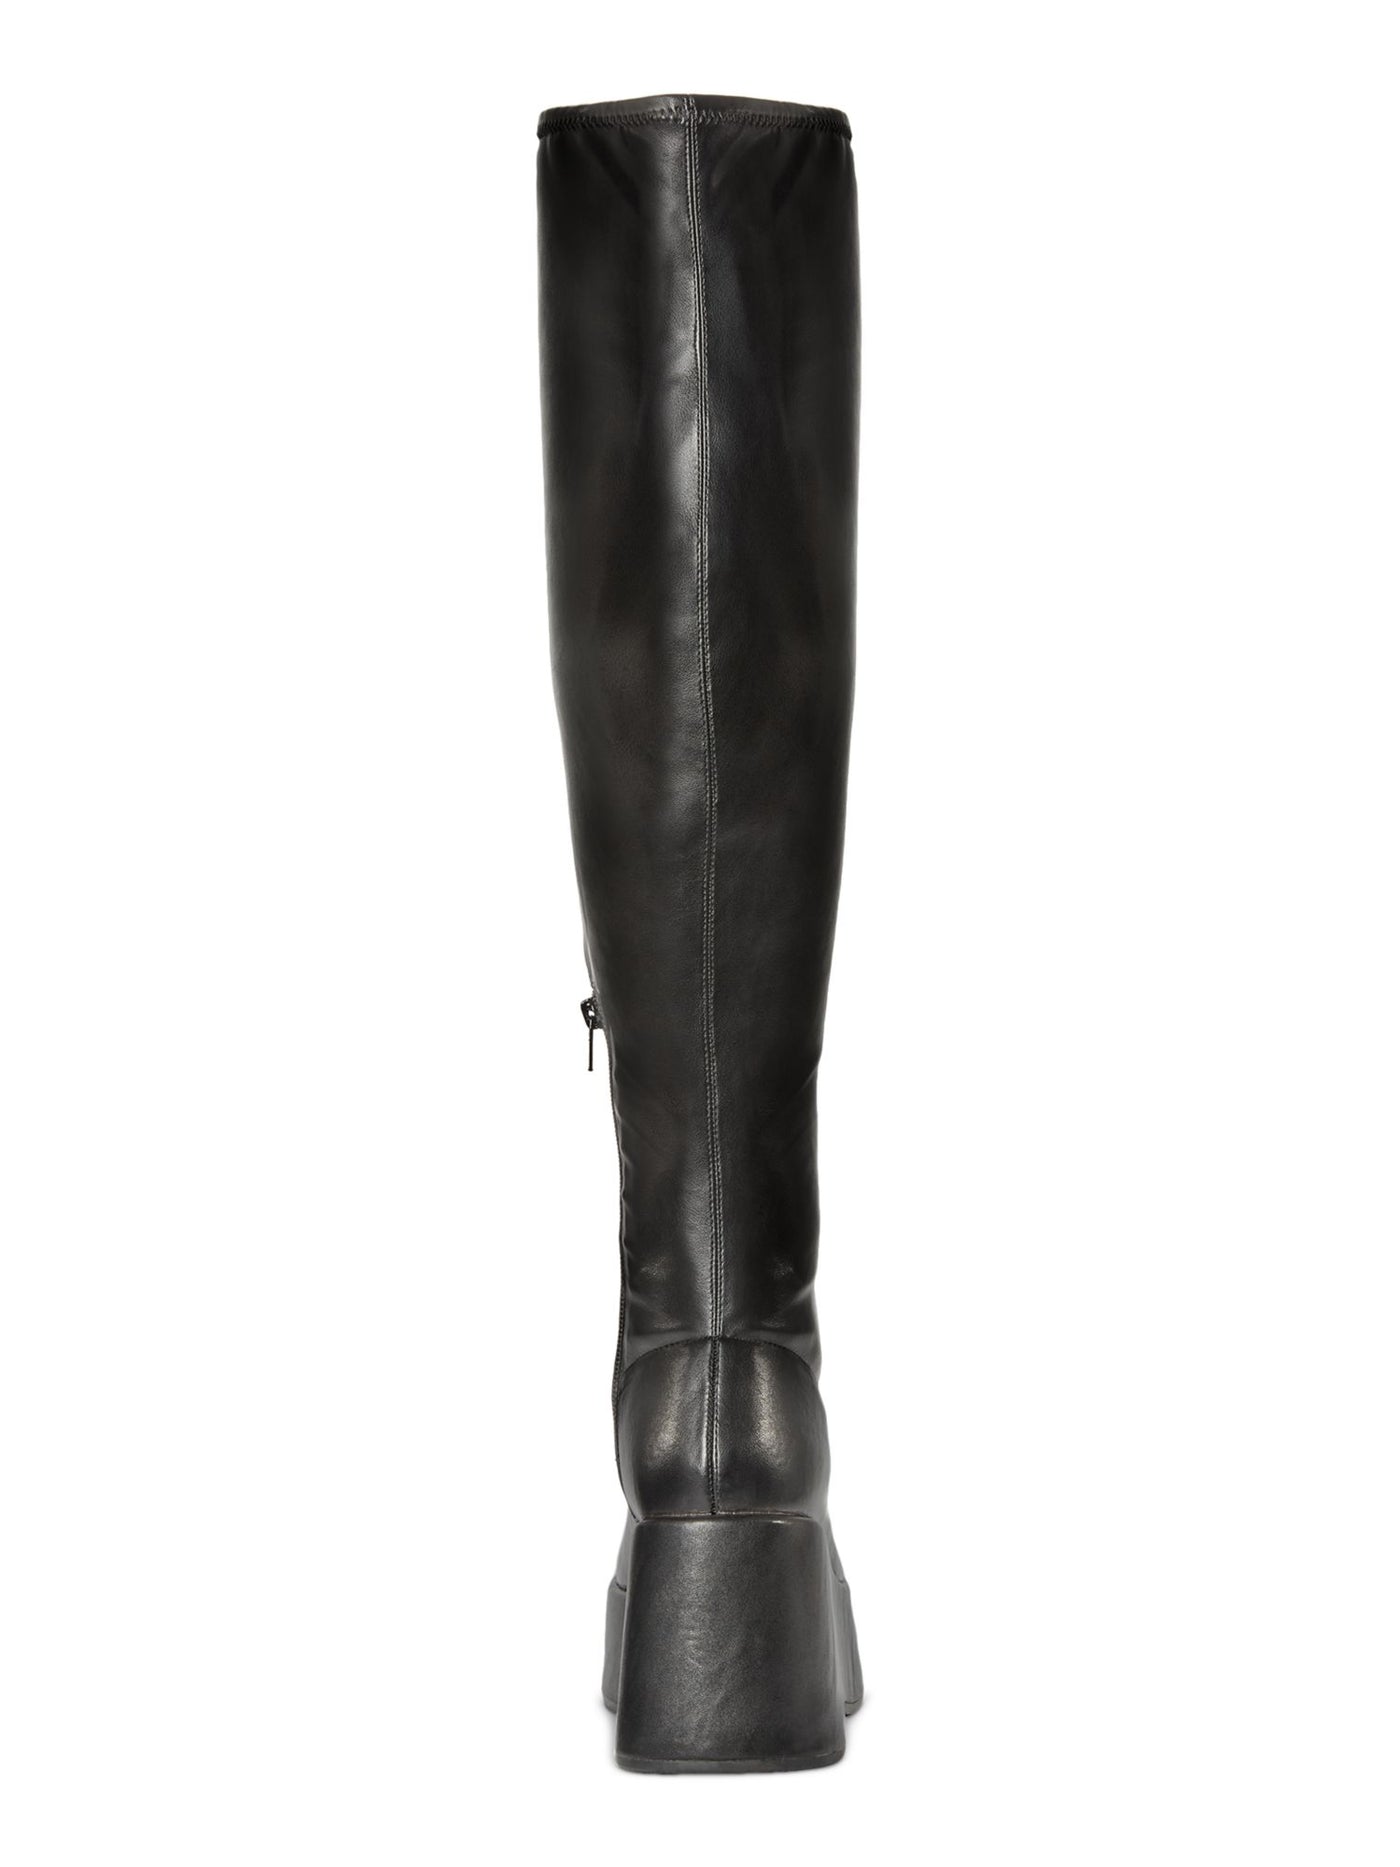 WILD PAIR Womens Black 2" Platform Padded Enchantt Round Toe Wedge Zip-Up Dress Boots Shoes 7 M